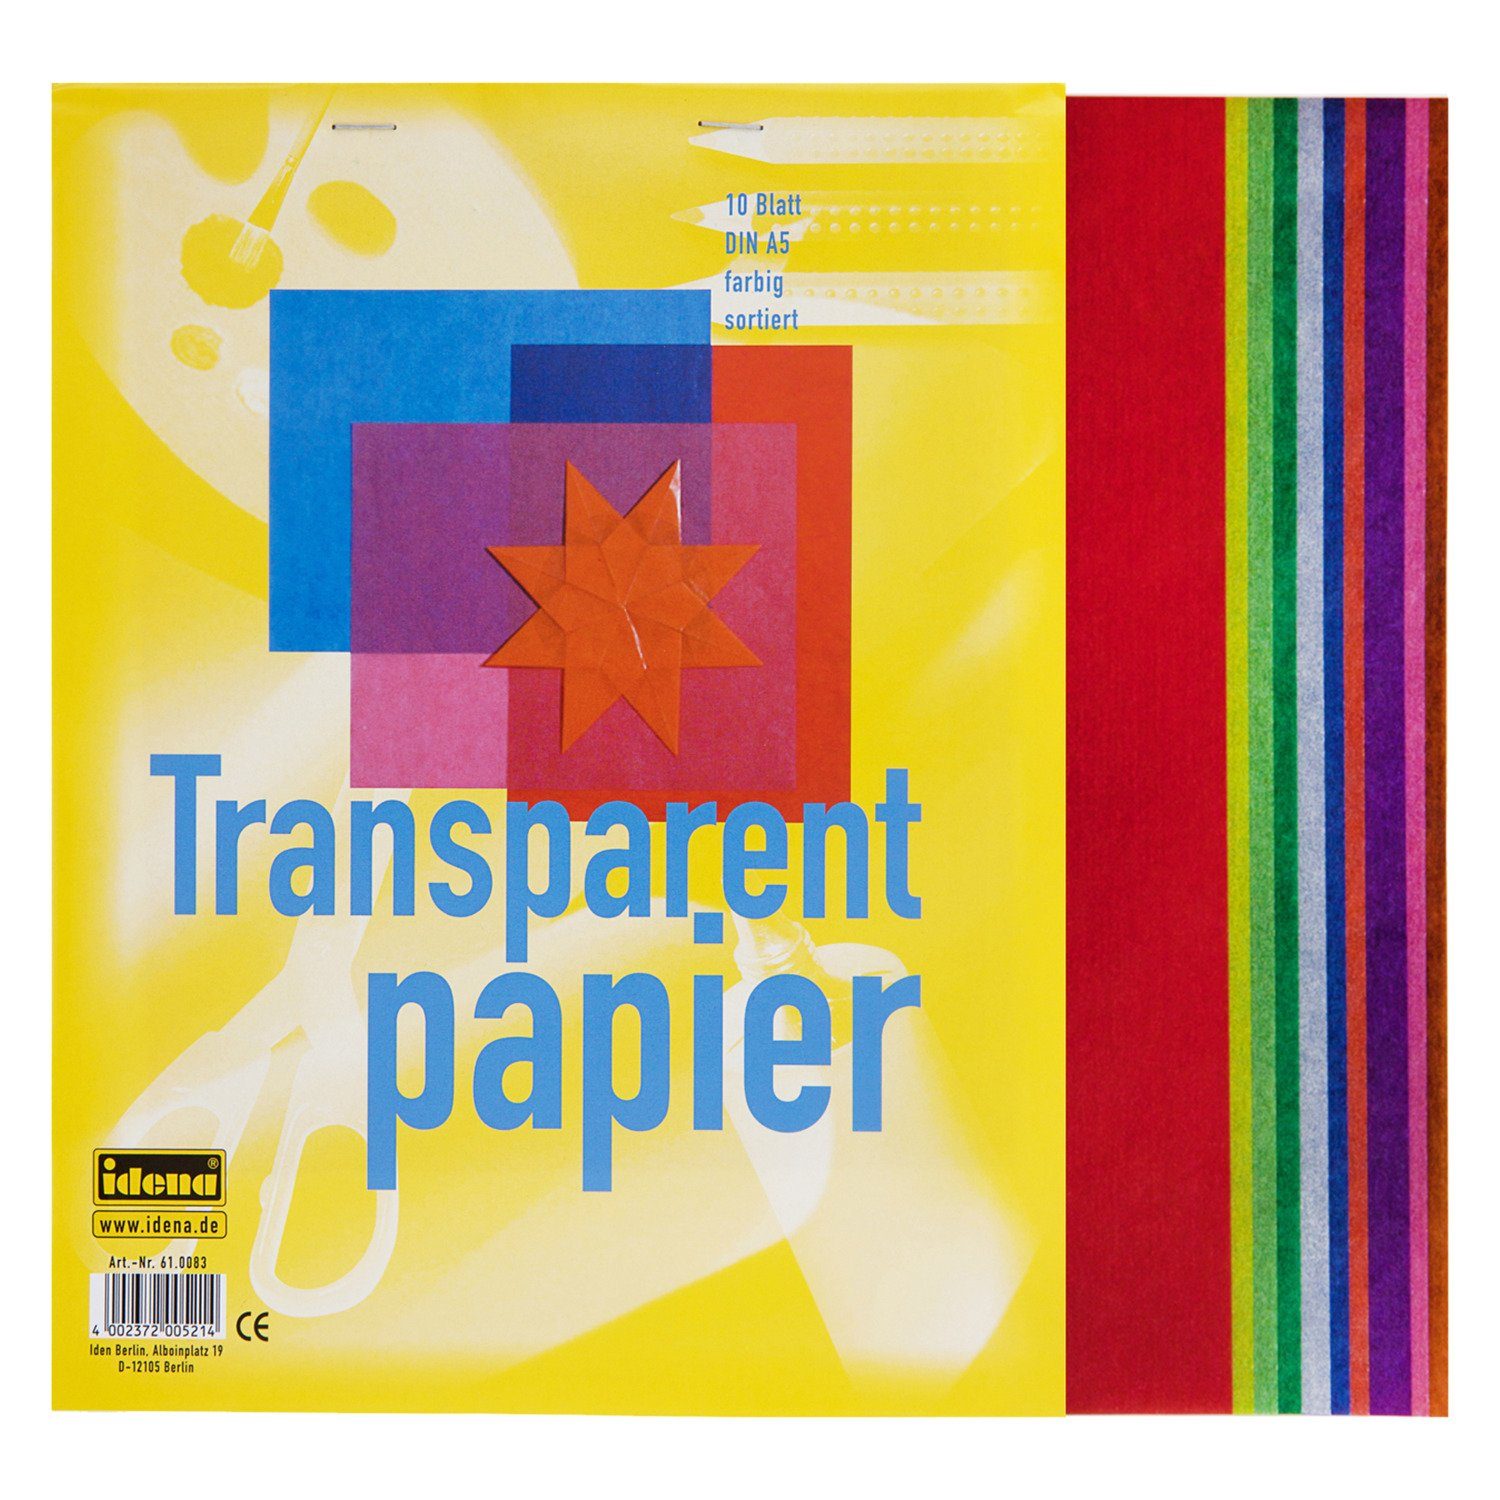 10 Transparentpapier farbig A5 Idena sortiert Idena Blatt Transparentpap.